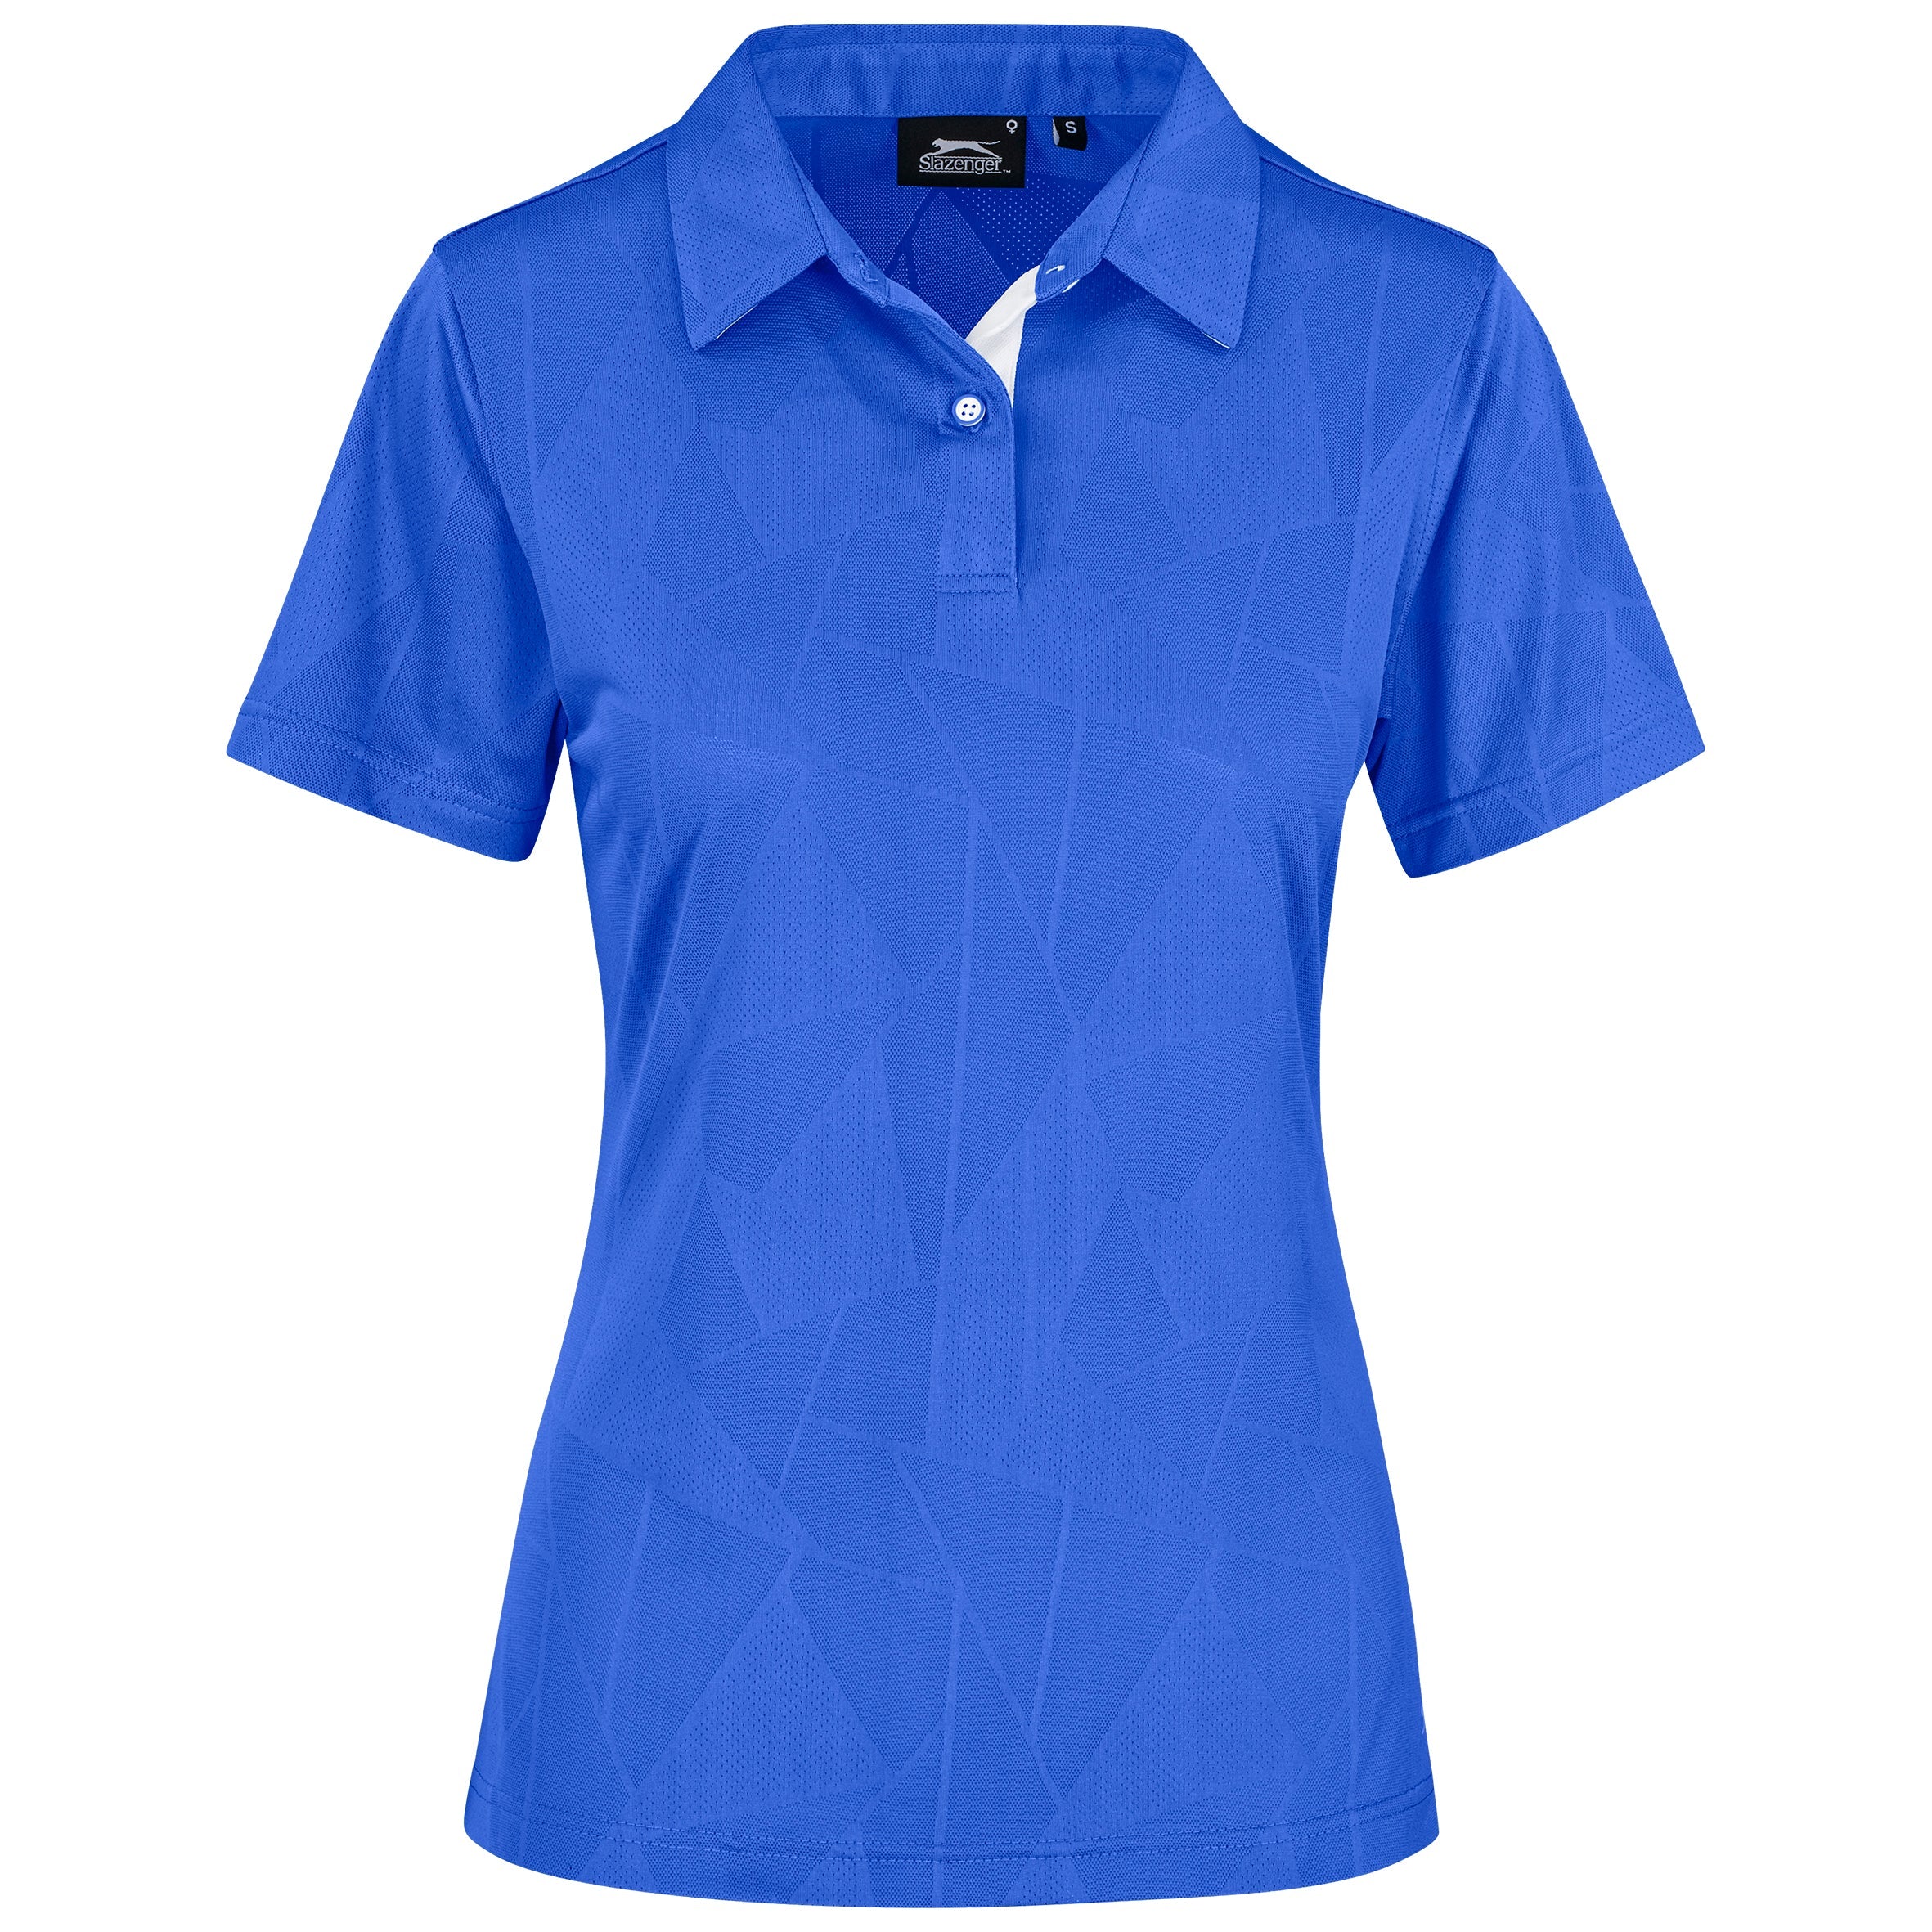 Ladies Motif Golf Shirt L / Royal Blue / RB